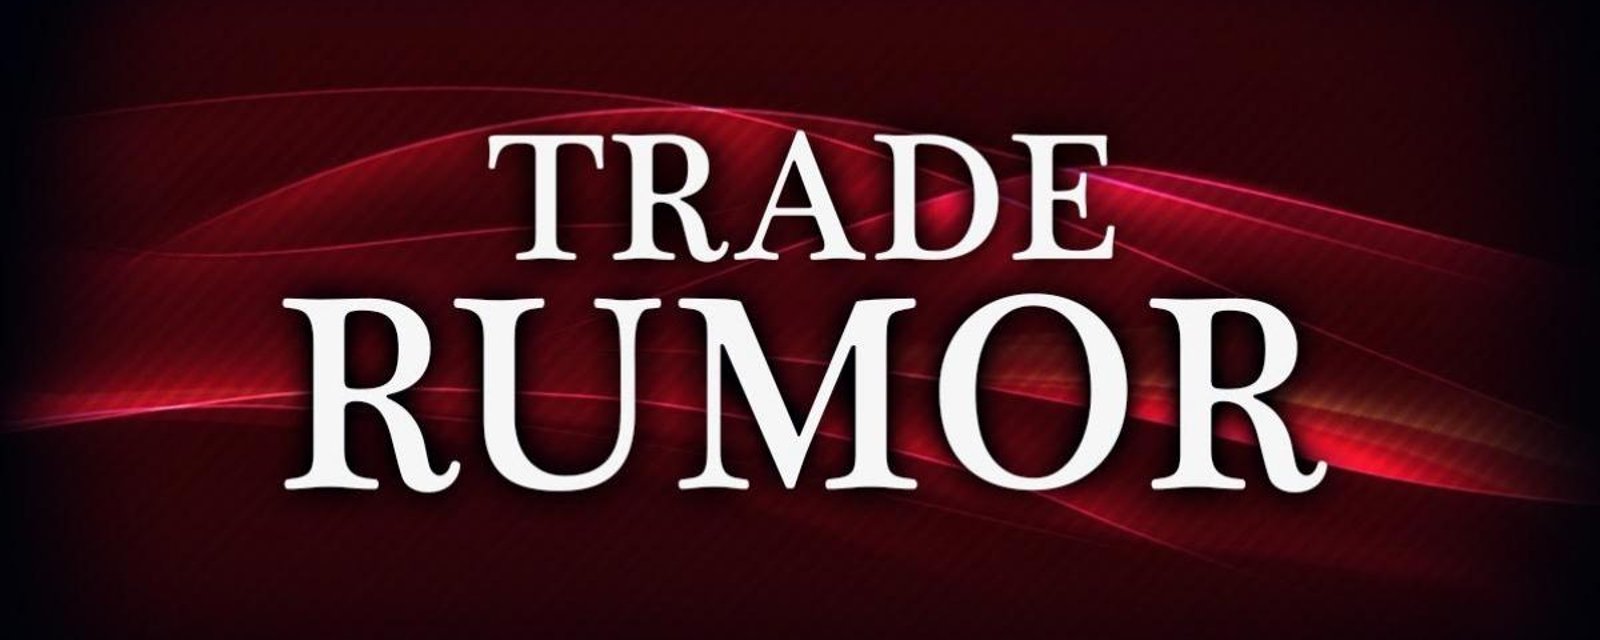 MAJOR rumors of a big trade coming any minute.